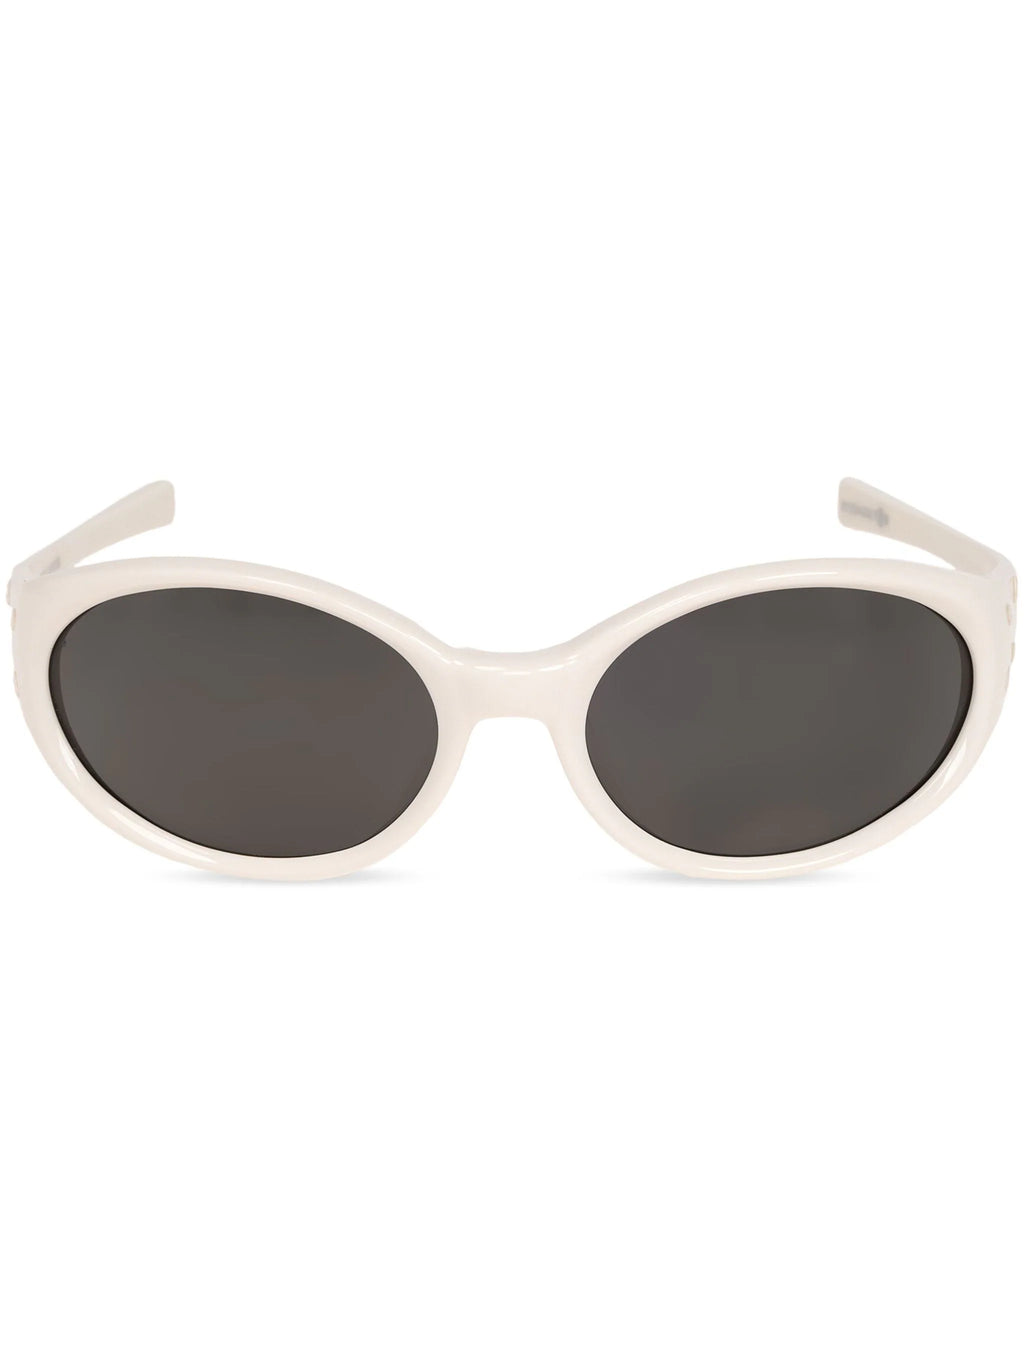 GENTLE MONSTER X MAISON MARGIELA MM104-W2 Sunglasses